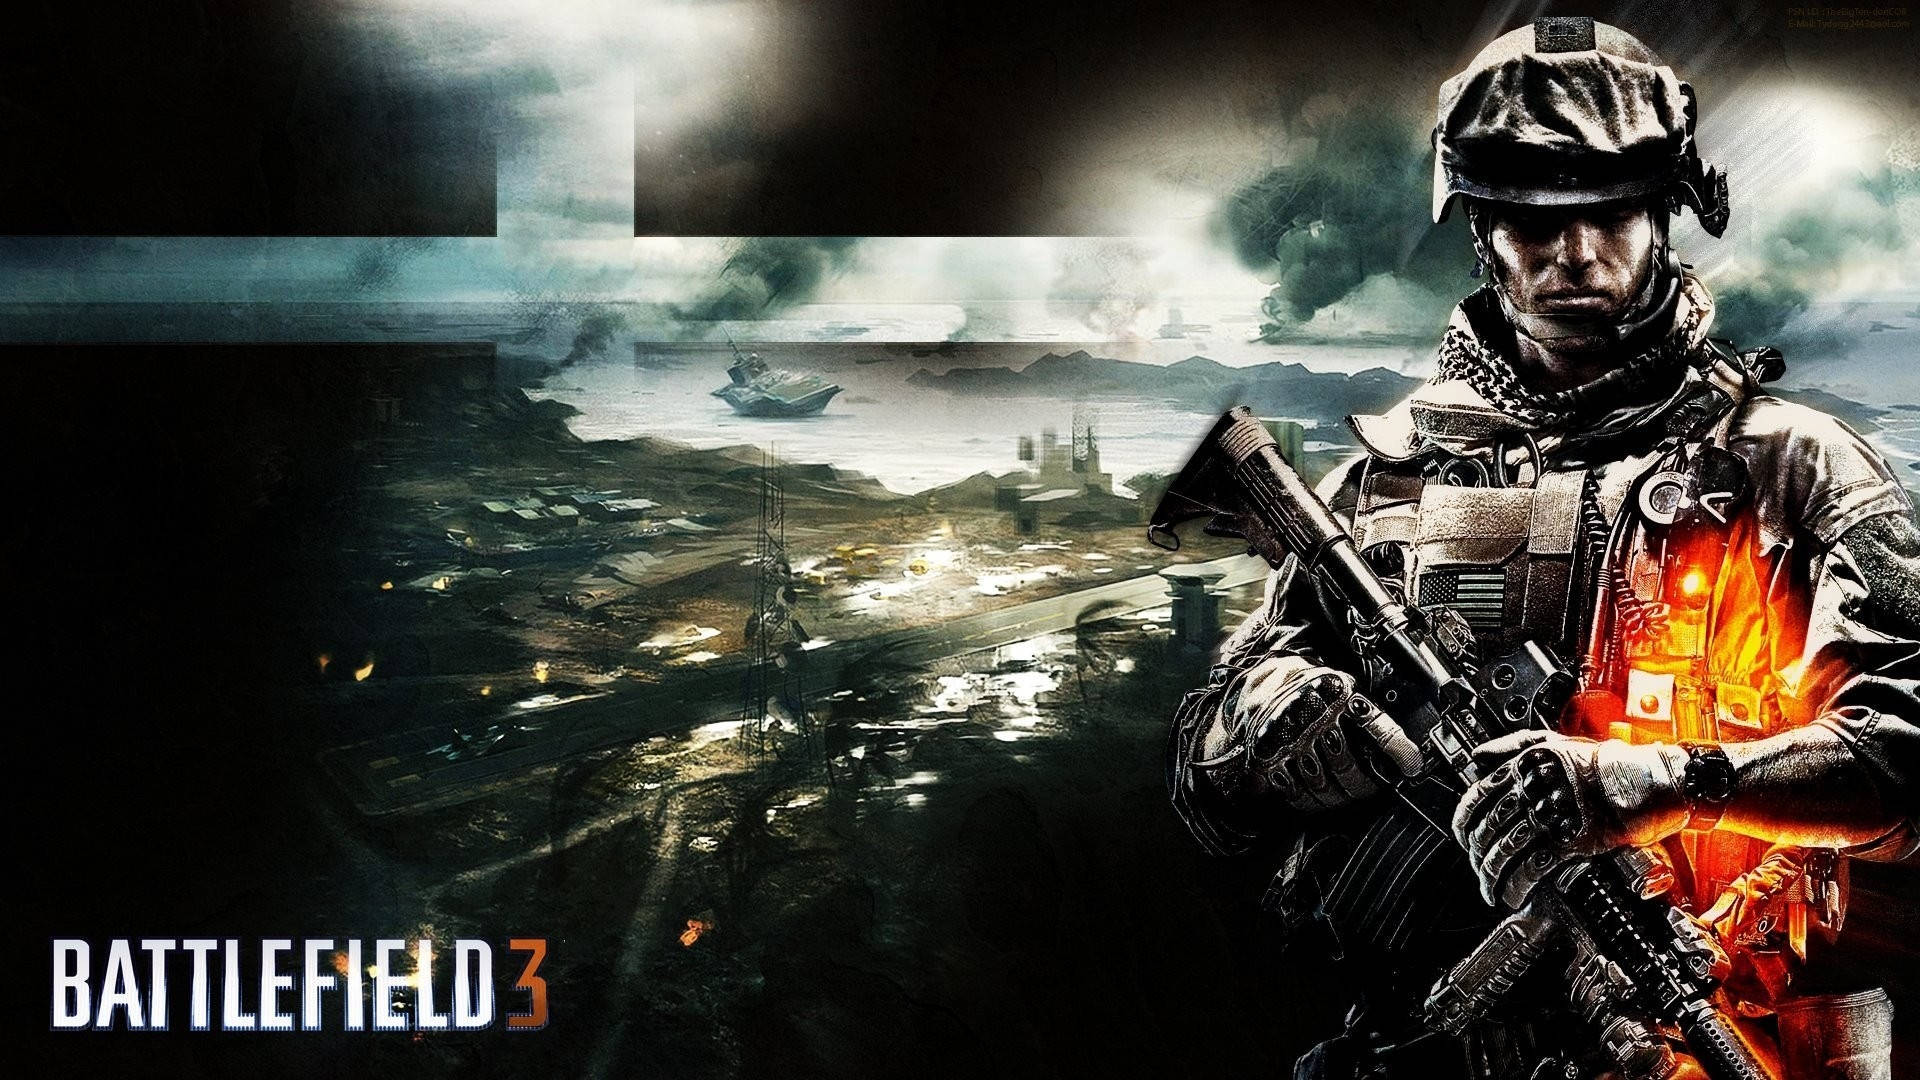 Cool Battlefield 3 Shooting Video Game Poster Wallpaper